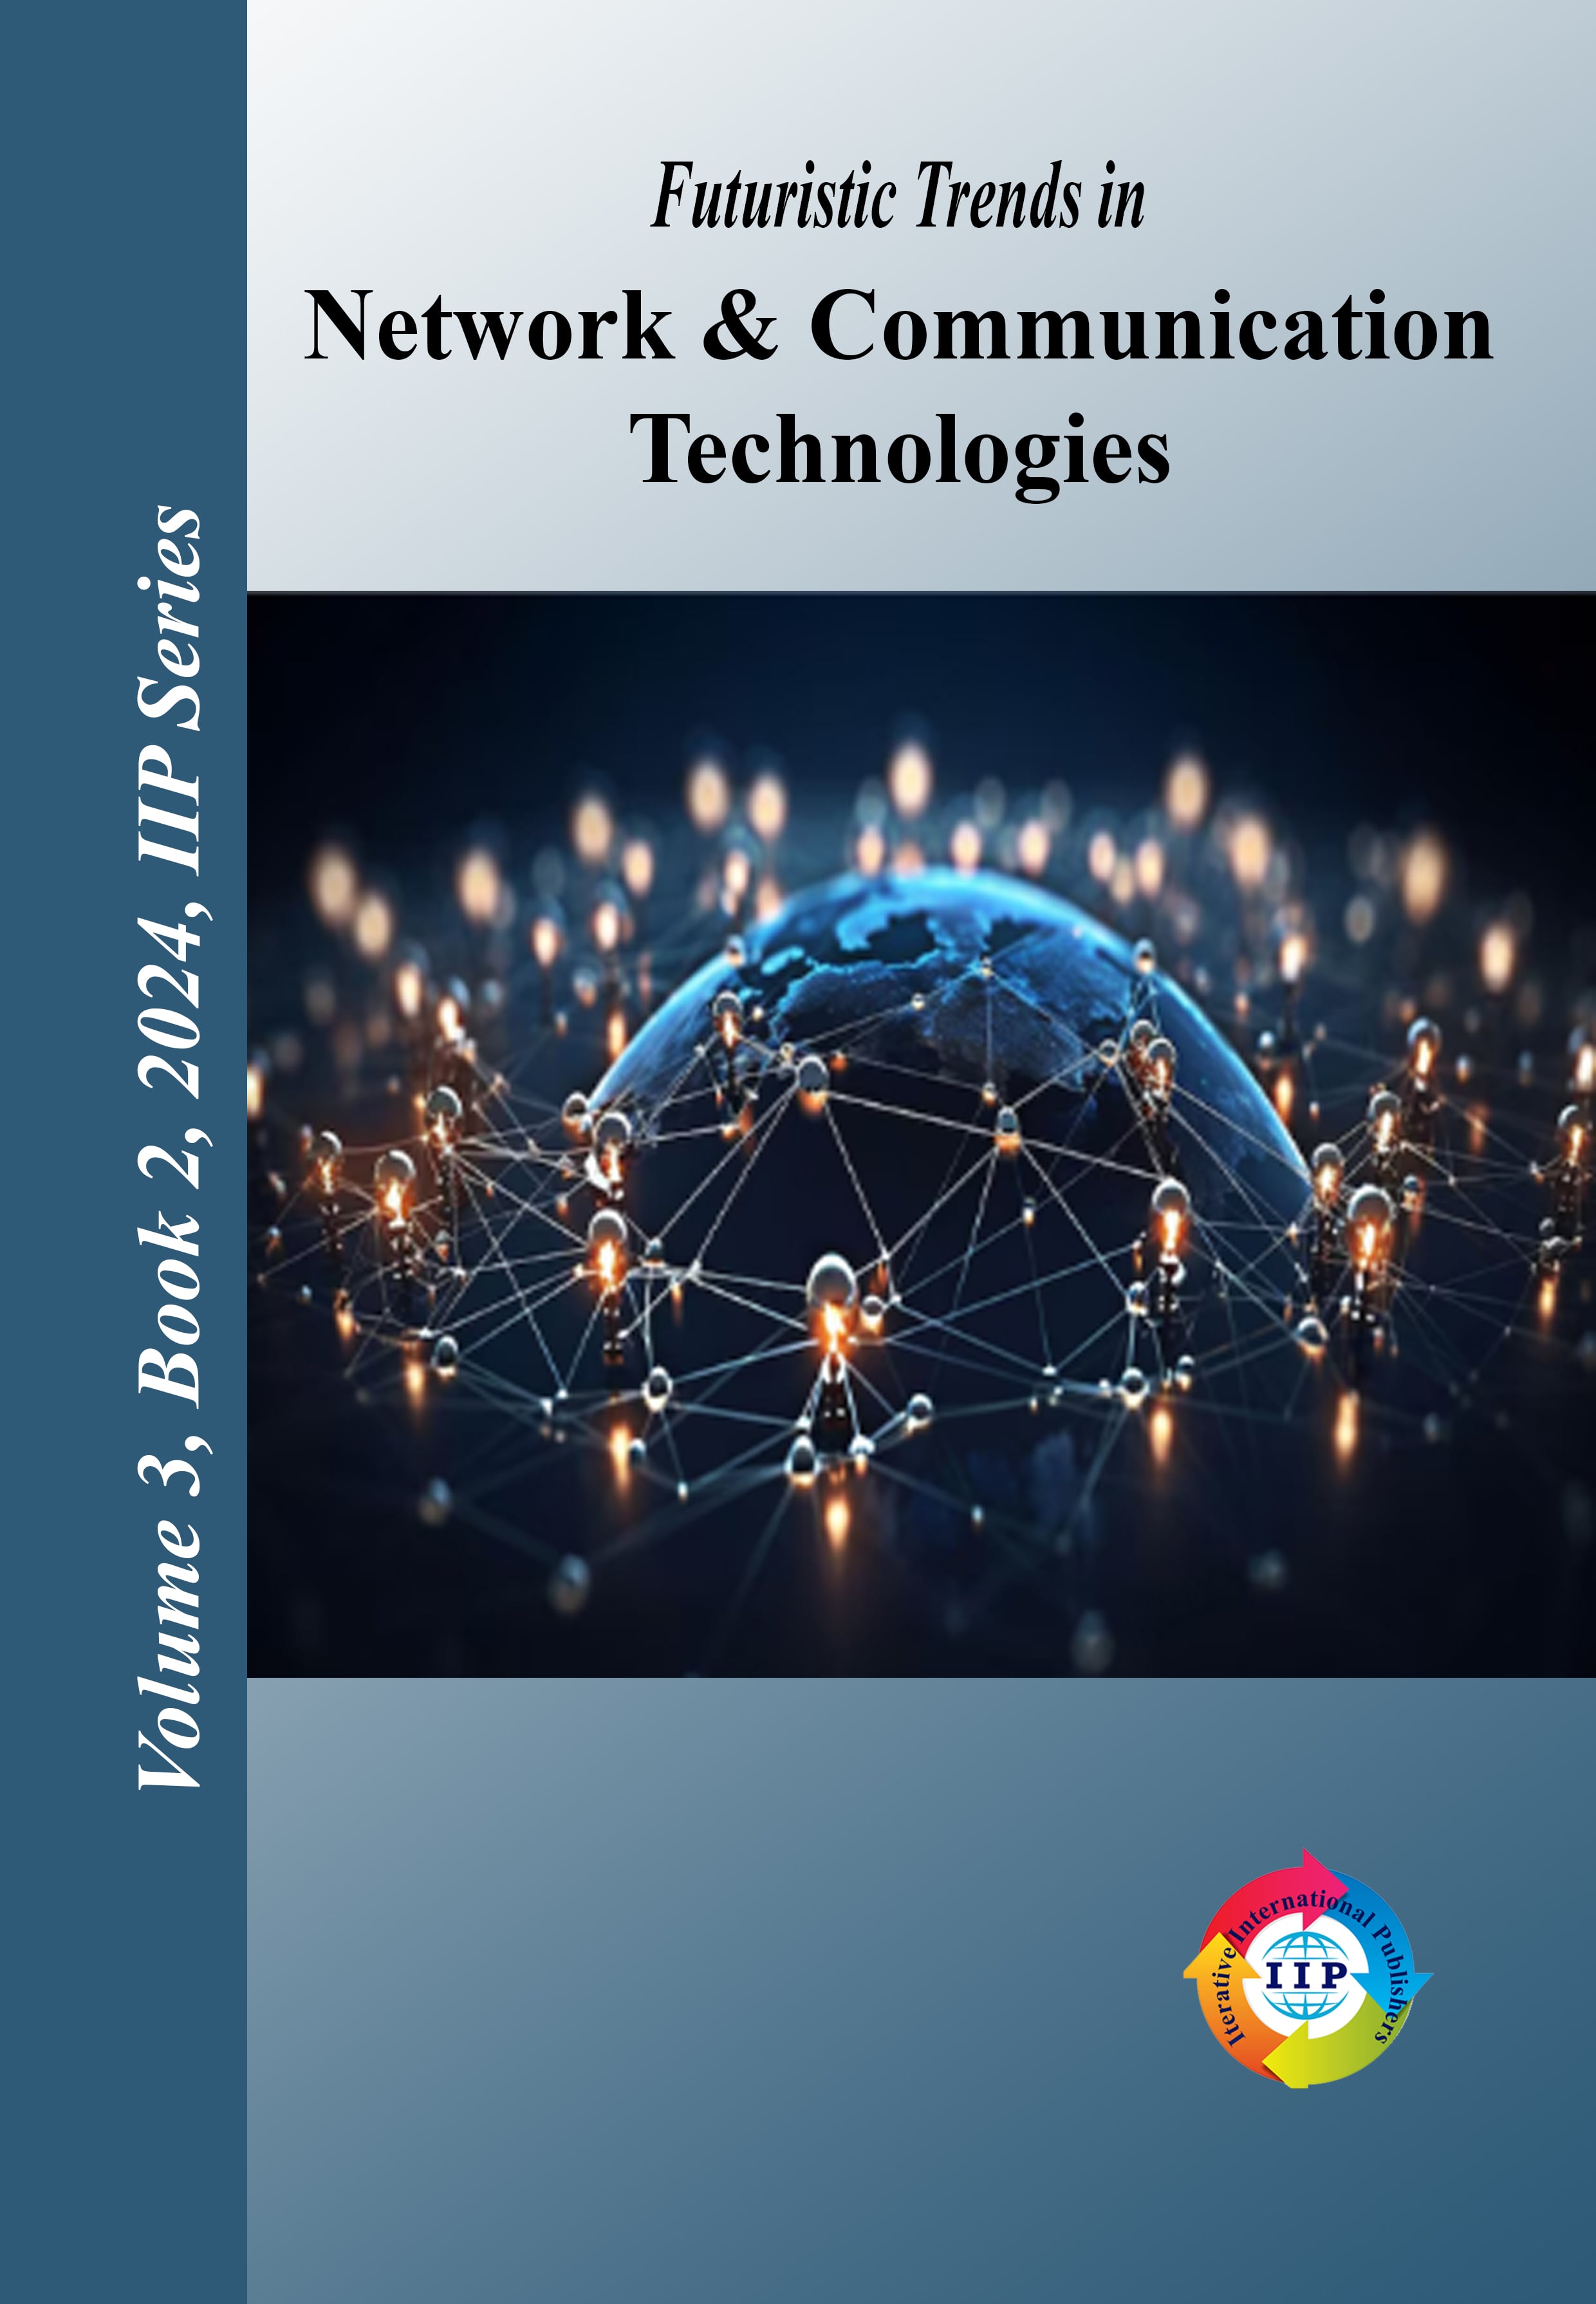 Futuristic Trends in Network & Communication Technologies Volume 3 Book 2